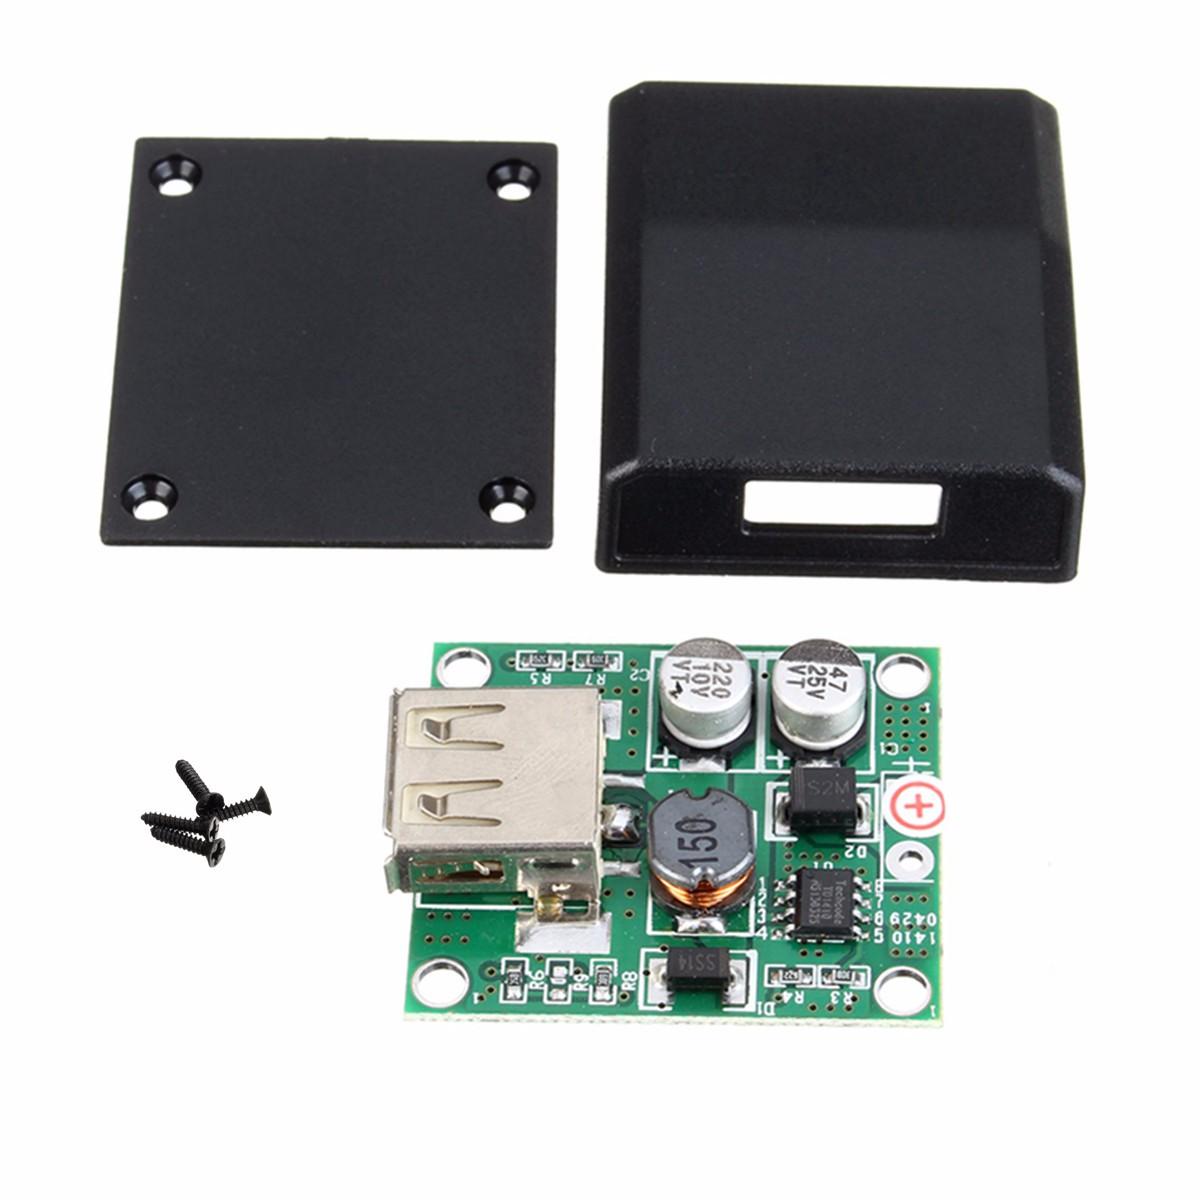 

3pcs DIY 5V 2A Voltage Regulator Junction Box Solar Panel Charger Special Kit For Electronic Production